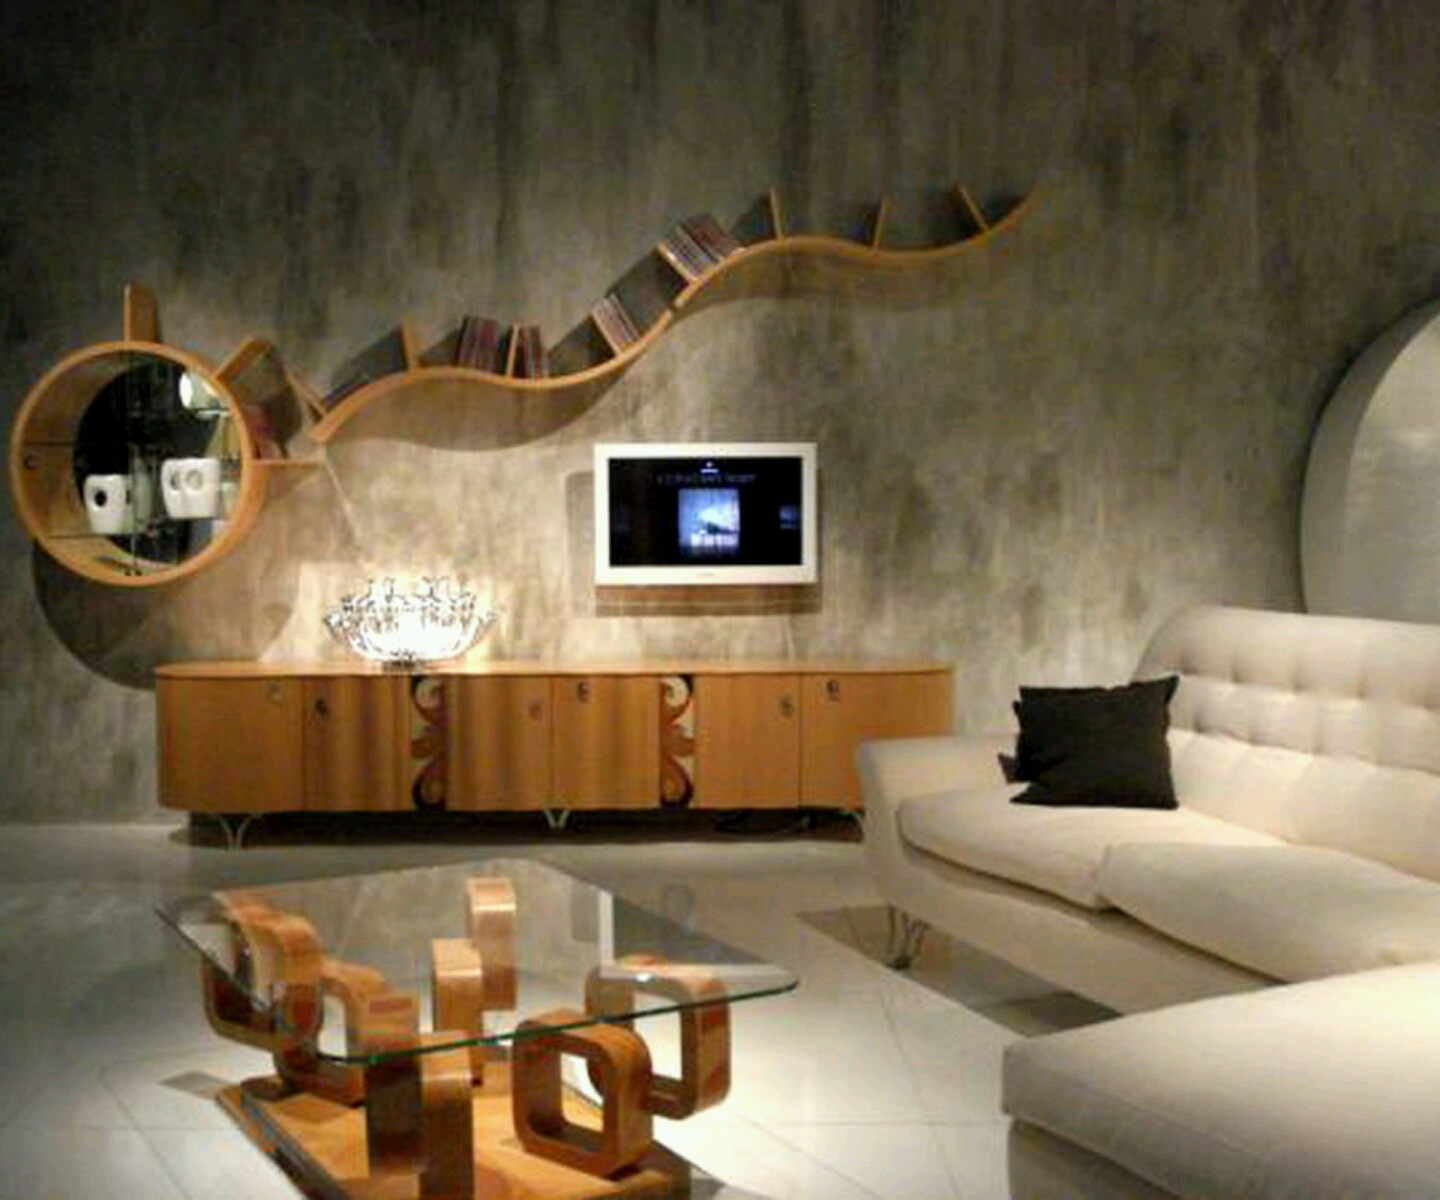 https://blogger.googleusercontent.com/img/b/R29vZ2xl/AVvXsEjf52bid420DLDbcQXv-vqM4o-sWFcvBKofs1391wlmZJ0r41NijLgGYZlzp8RkPoOntULBY8r8UXqofkzU7q9RFdFLbOREY1s8EdaVA9fkcaNNnws6IwVXo8GSyvCTPT5m3pCx27XyWgw/s1600/Modern+living+room+designs+ideas..jpg